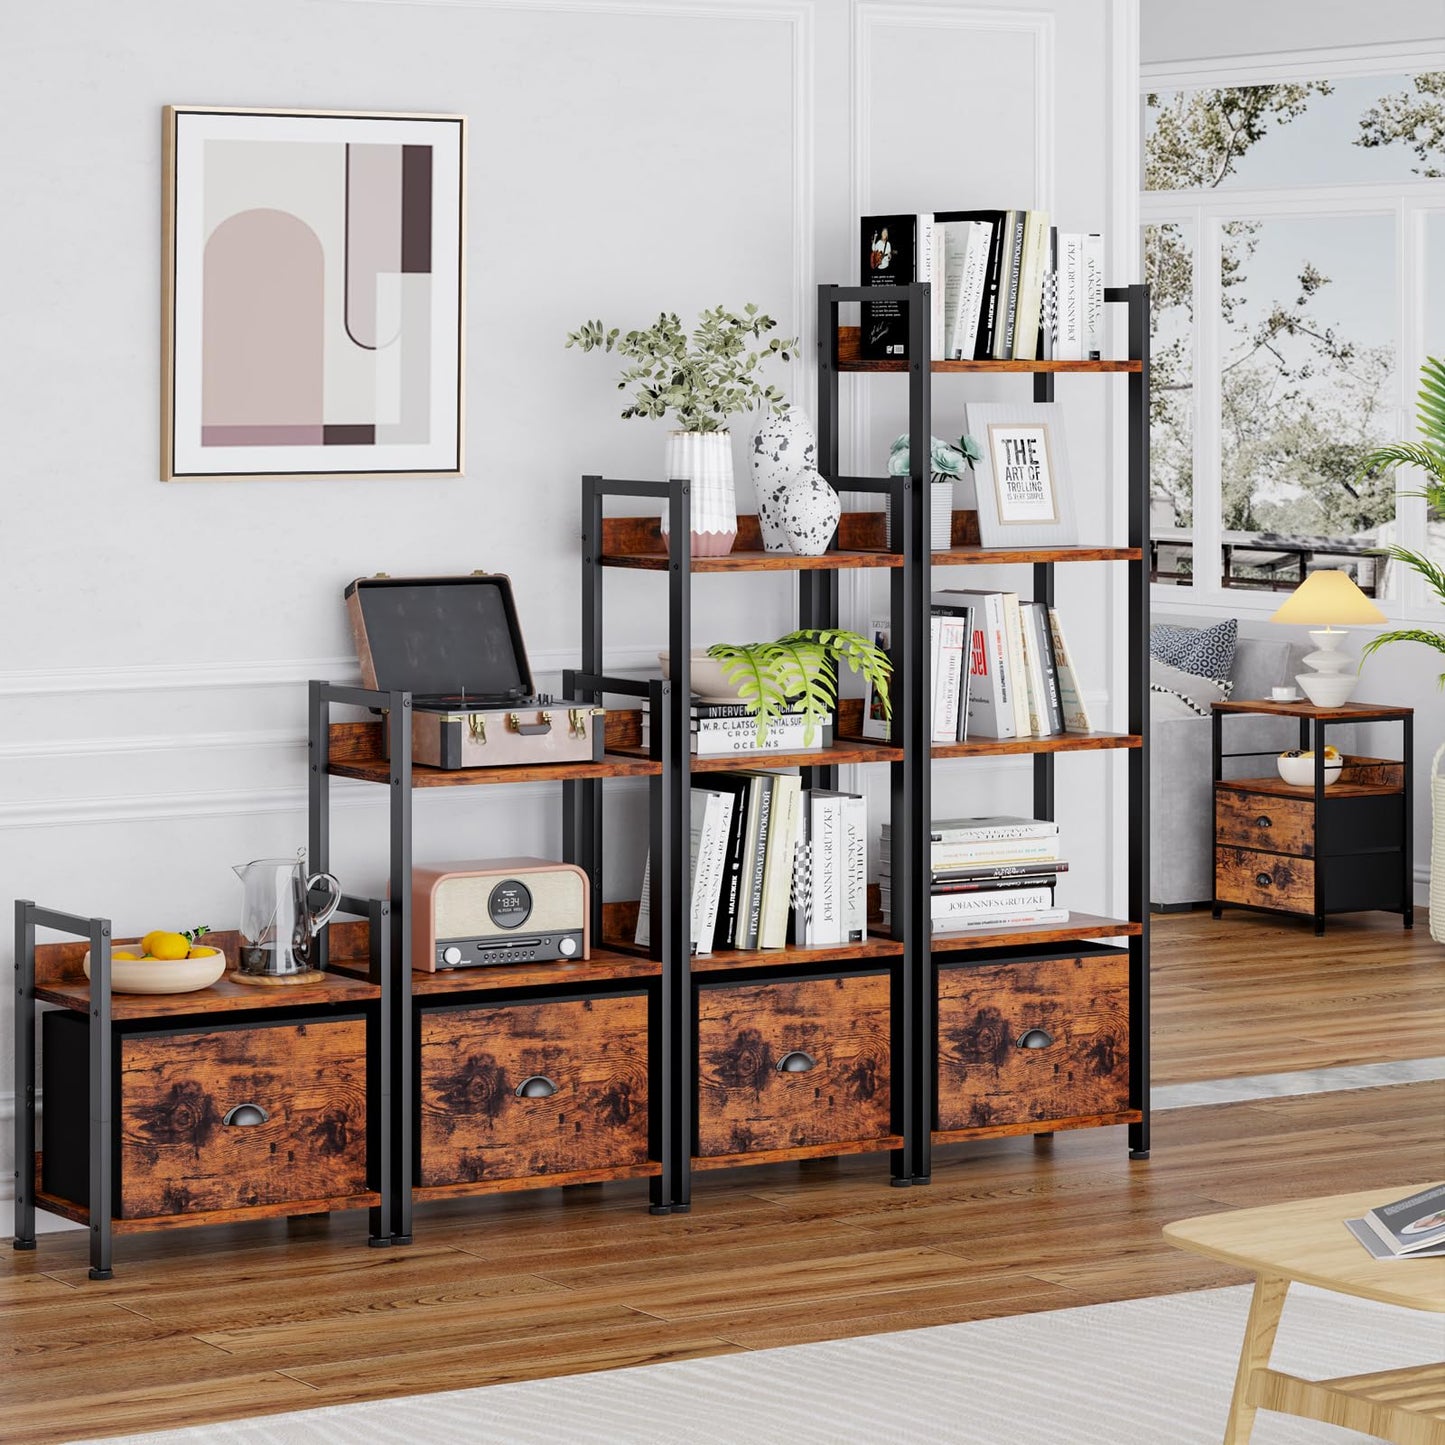 Furologee 4 Tier Bookshelf with Drawer, Tall Bookcase with Shelves, Narrow Book Shelf Storage Organizer, Wood and Metal Display Standing Shelf Unit